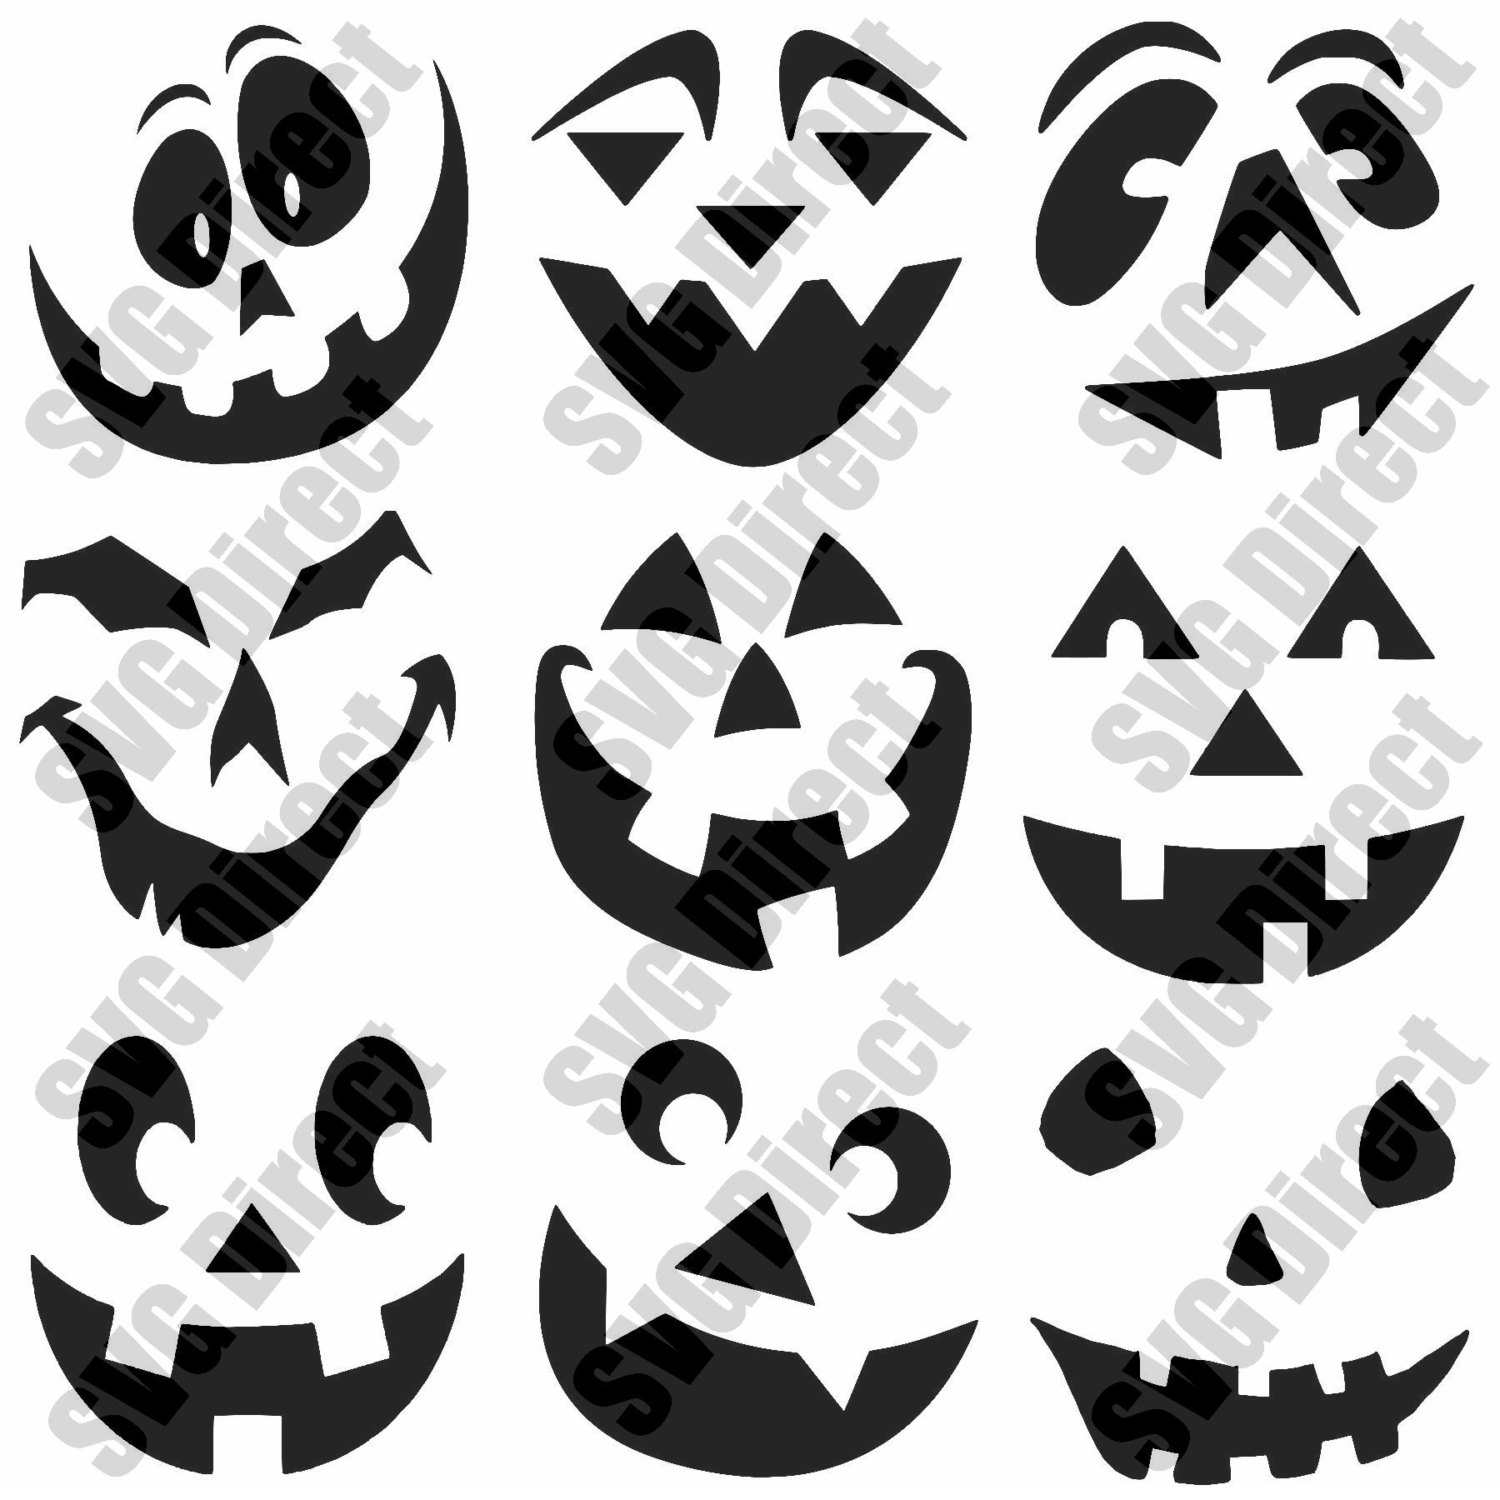 Download 9 Halloween Pumpkin Smiling Face Decal Designs SVG cut file | Etsy